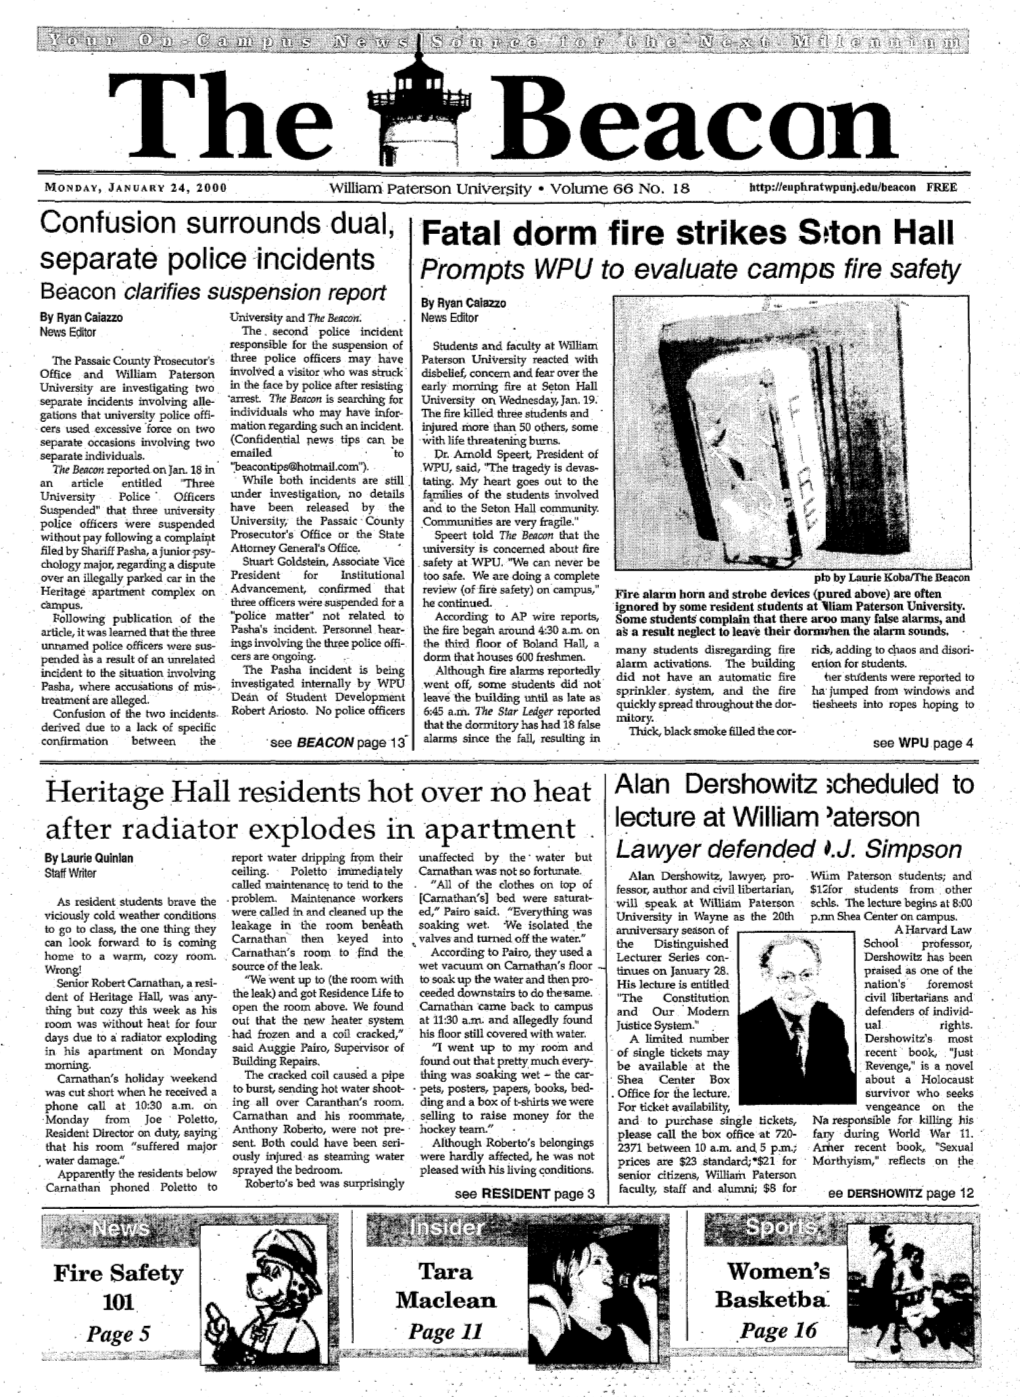 1 Fatal Dorm Fire Strikes Srton Hall